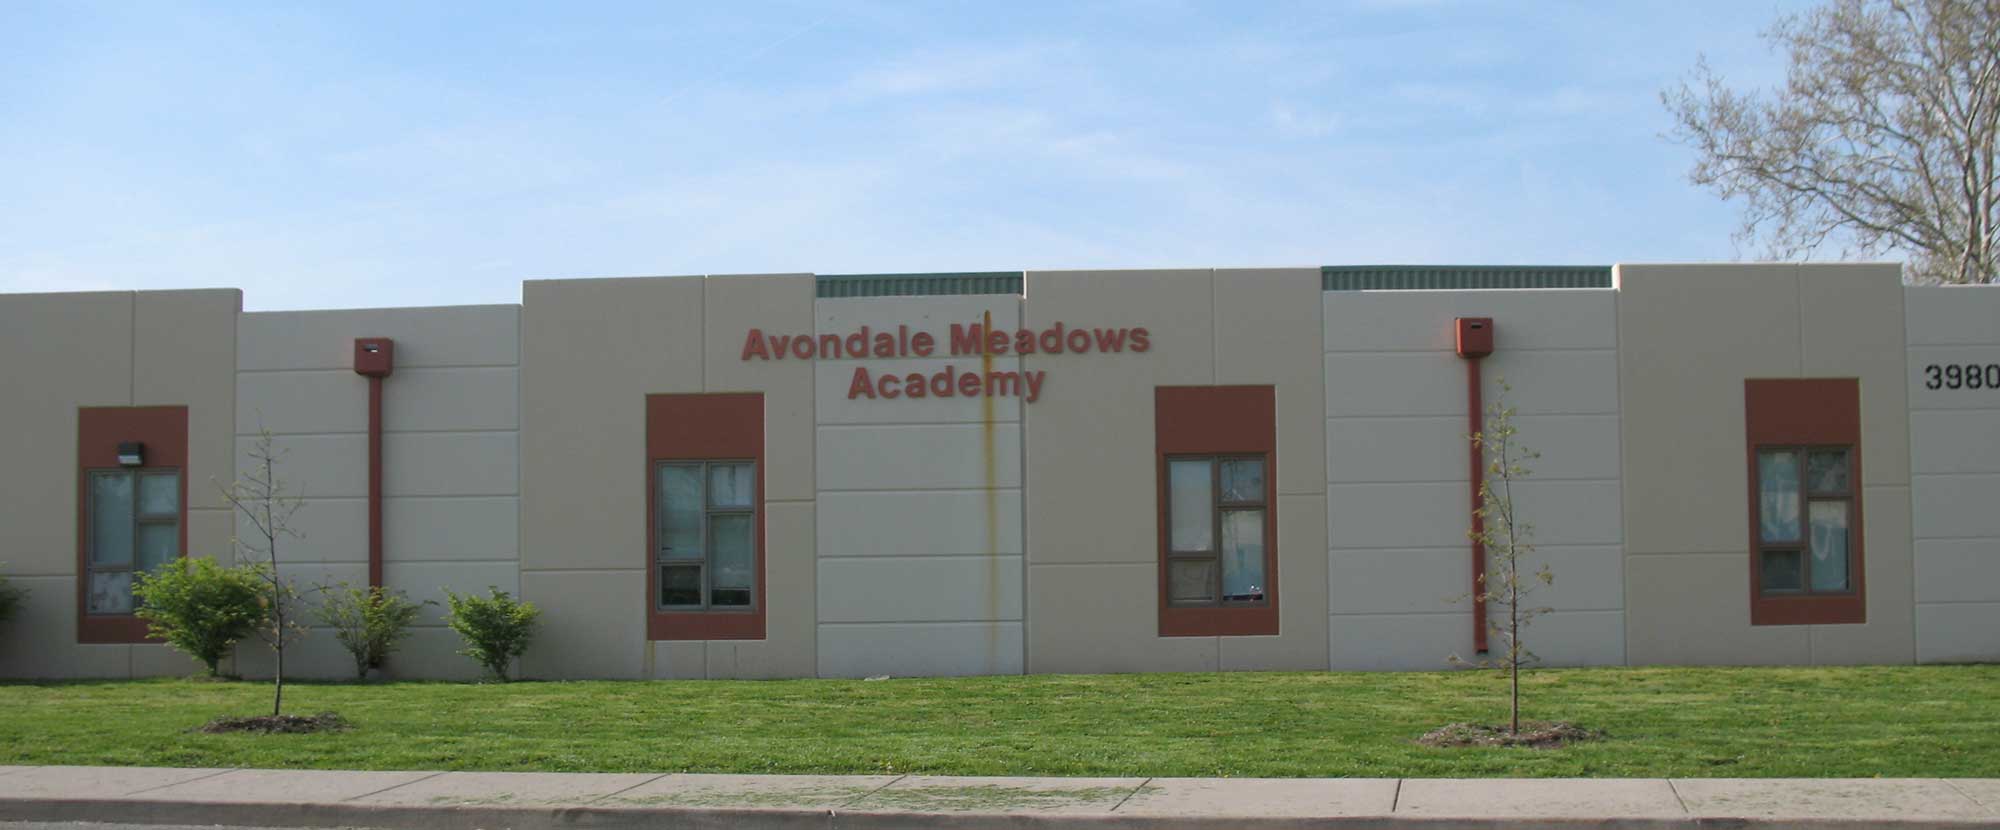 IMG_5119opt Avondale Meadows Academy